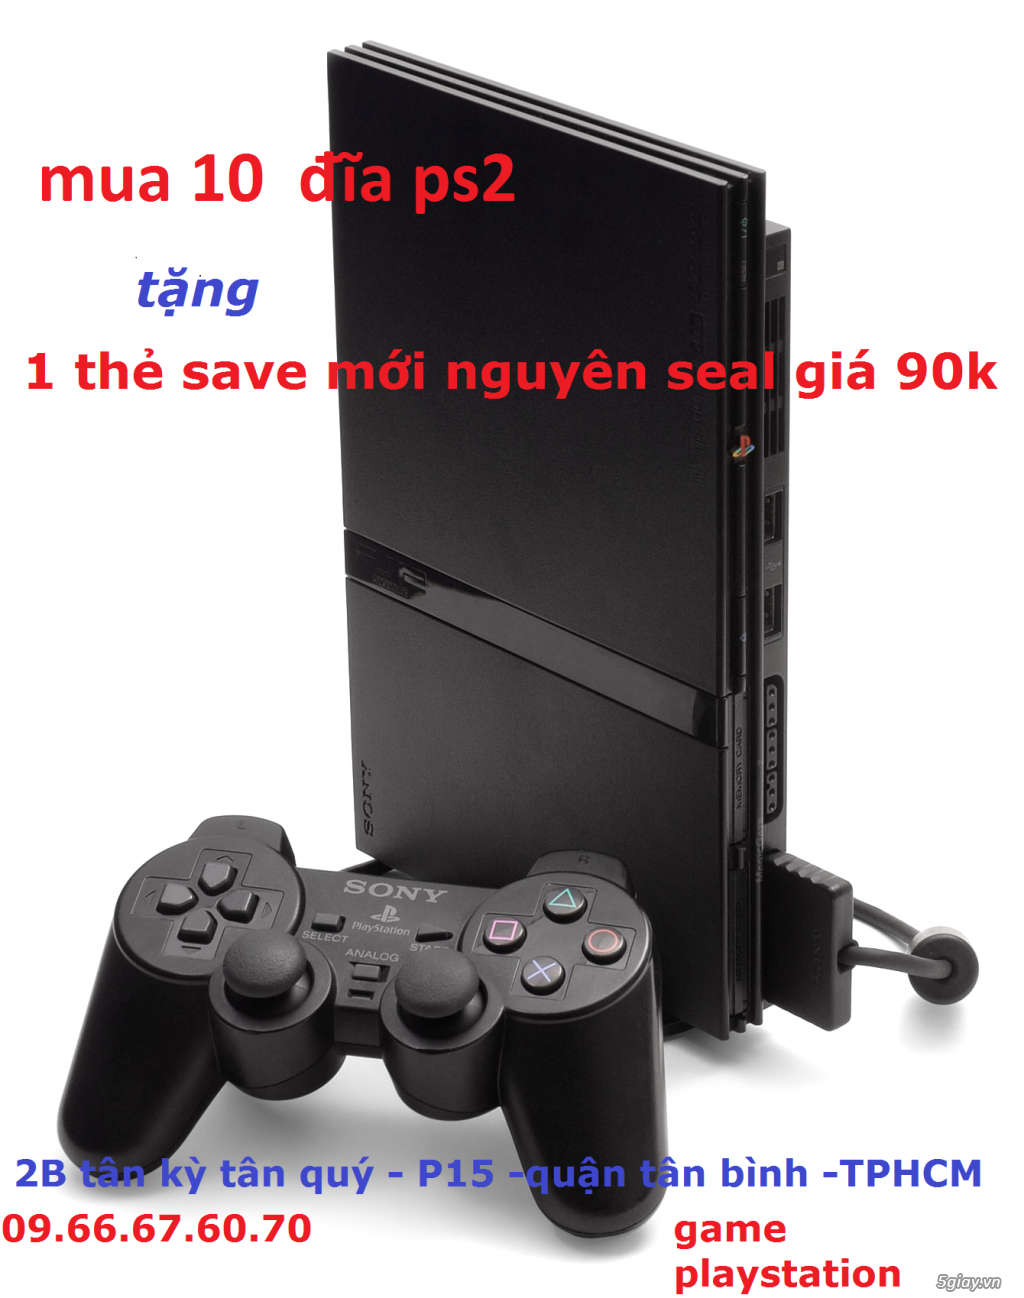 (Shop Game Playstation) Mua bán PS5/PS4/PS3/ PS2/ PS1/PSP/PSvita/Nintendo... uy tín - 5